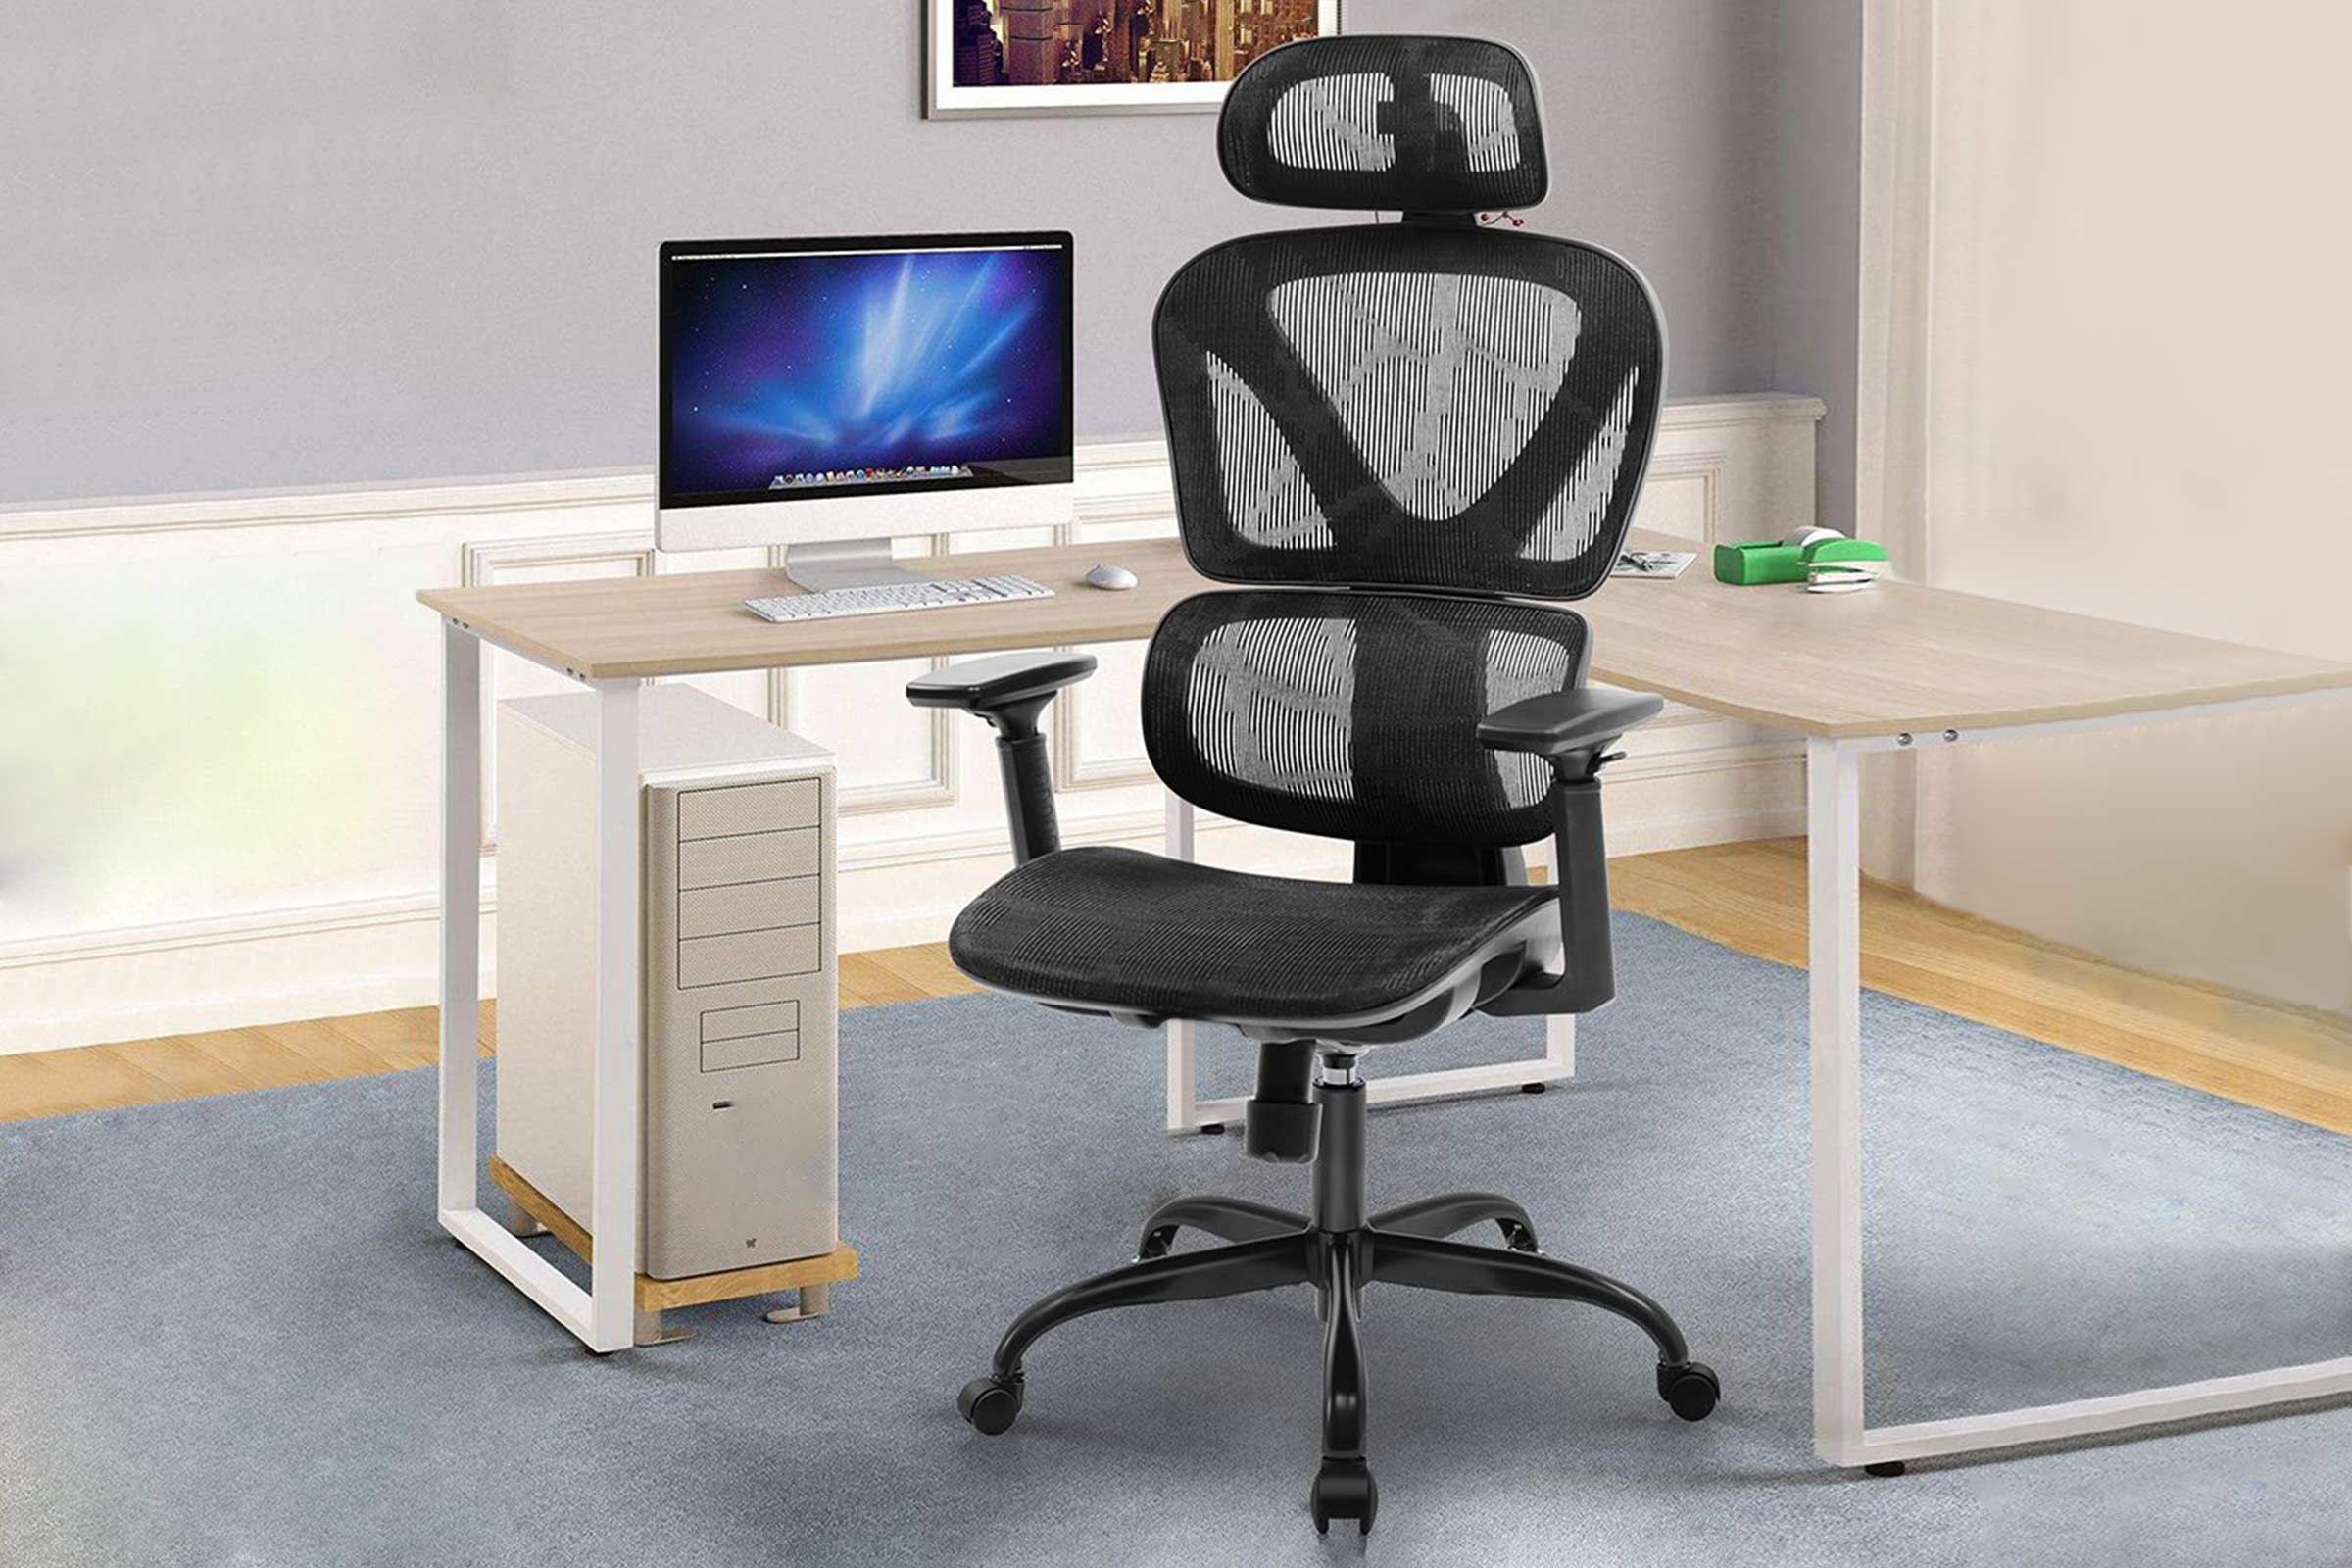 Dropship Ergonomic Office Desk Chair,Mesh High Back Computer Chair